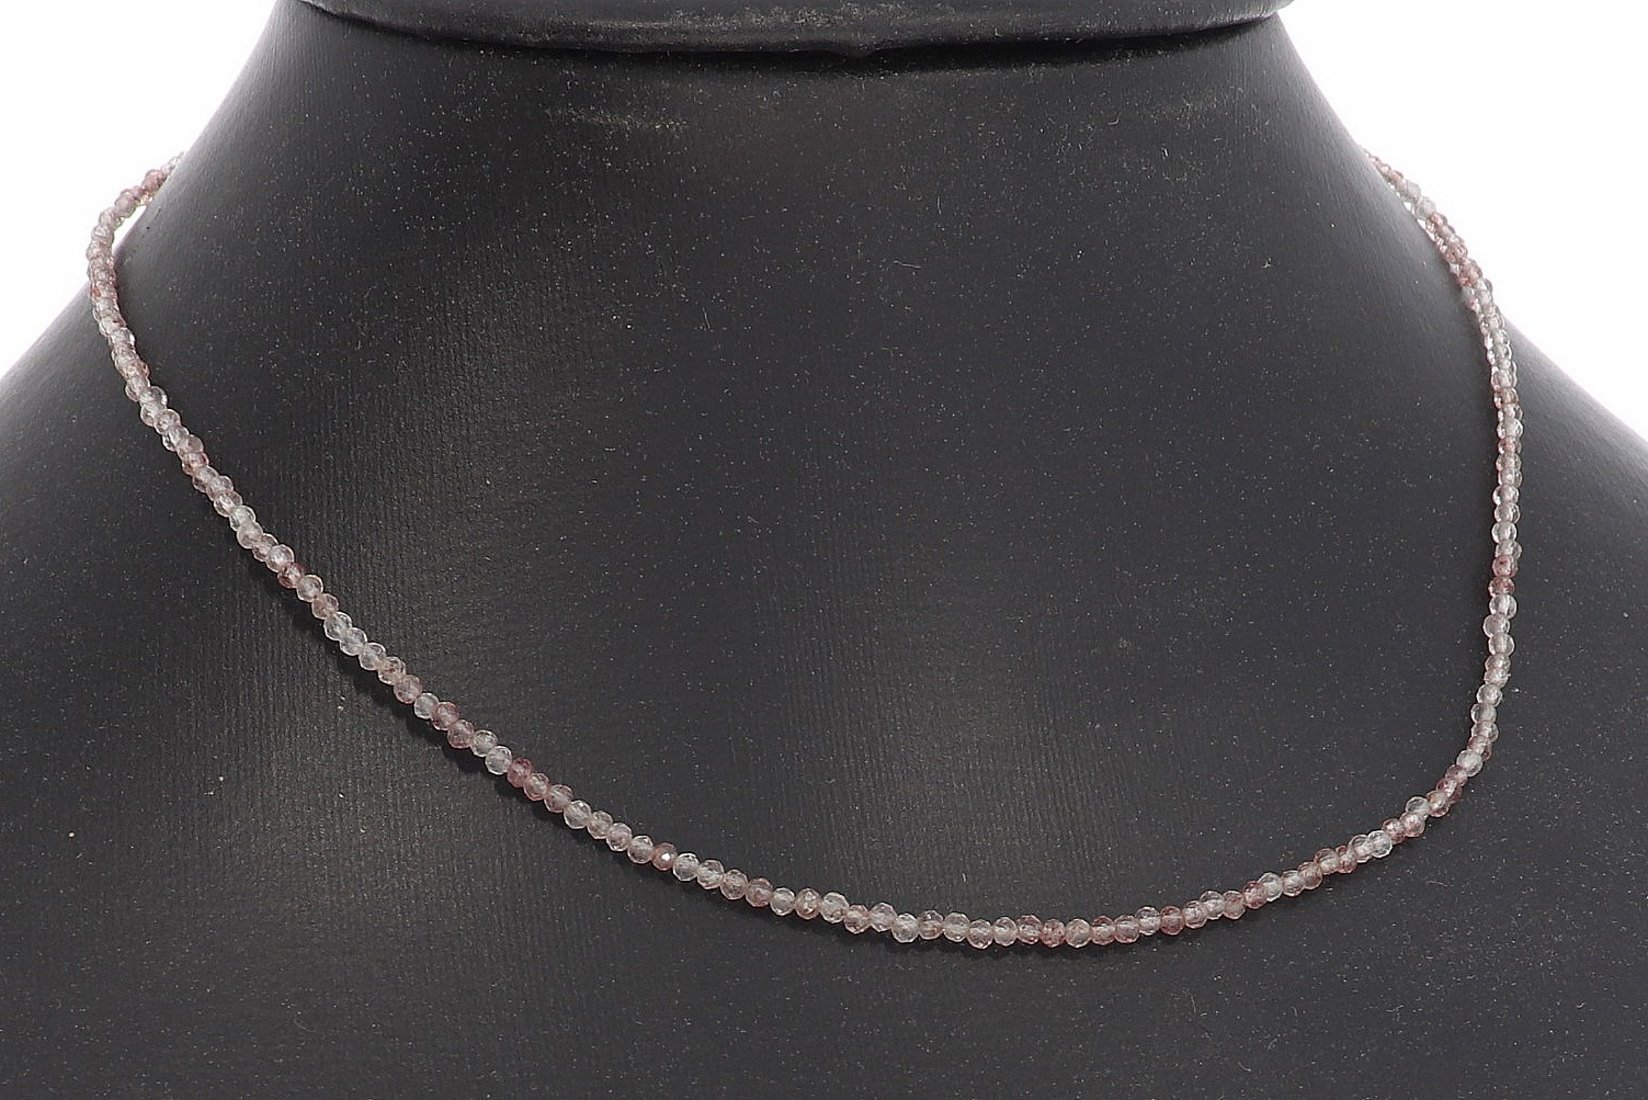 Erdbeerquarz Kugel Halskette facettiert Silber farben 2mm - 40-45cm Kettenverlängerer KK329